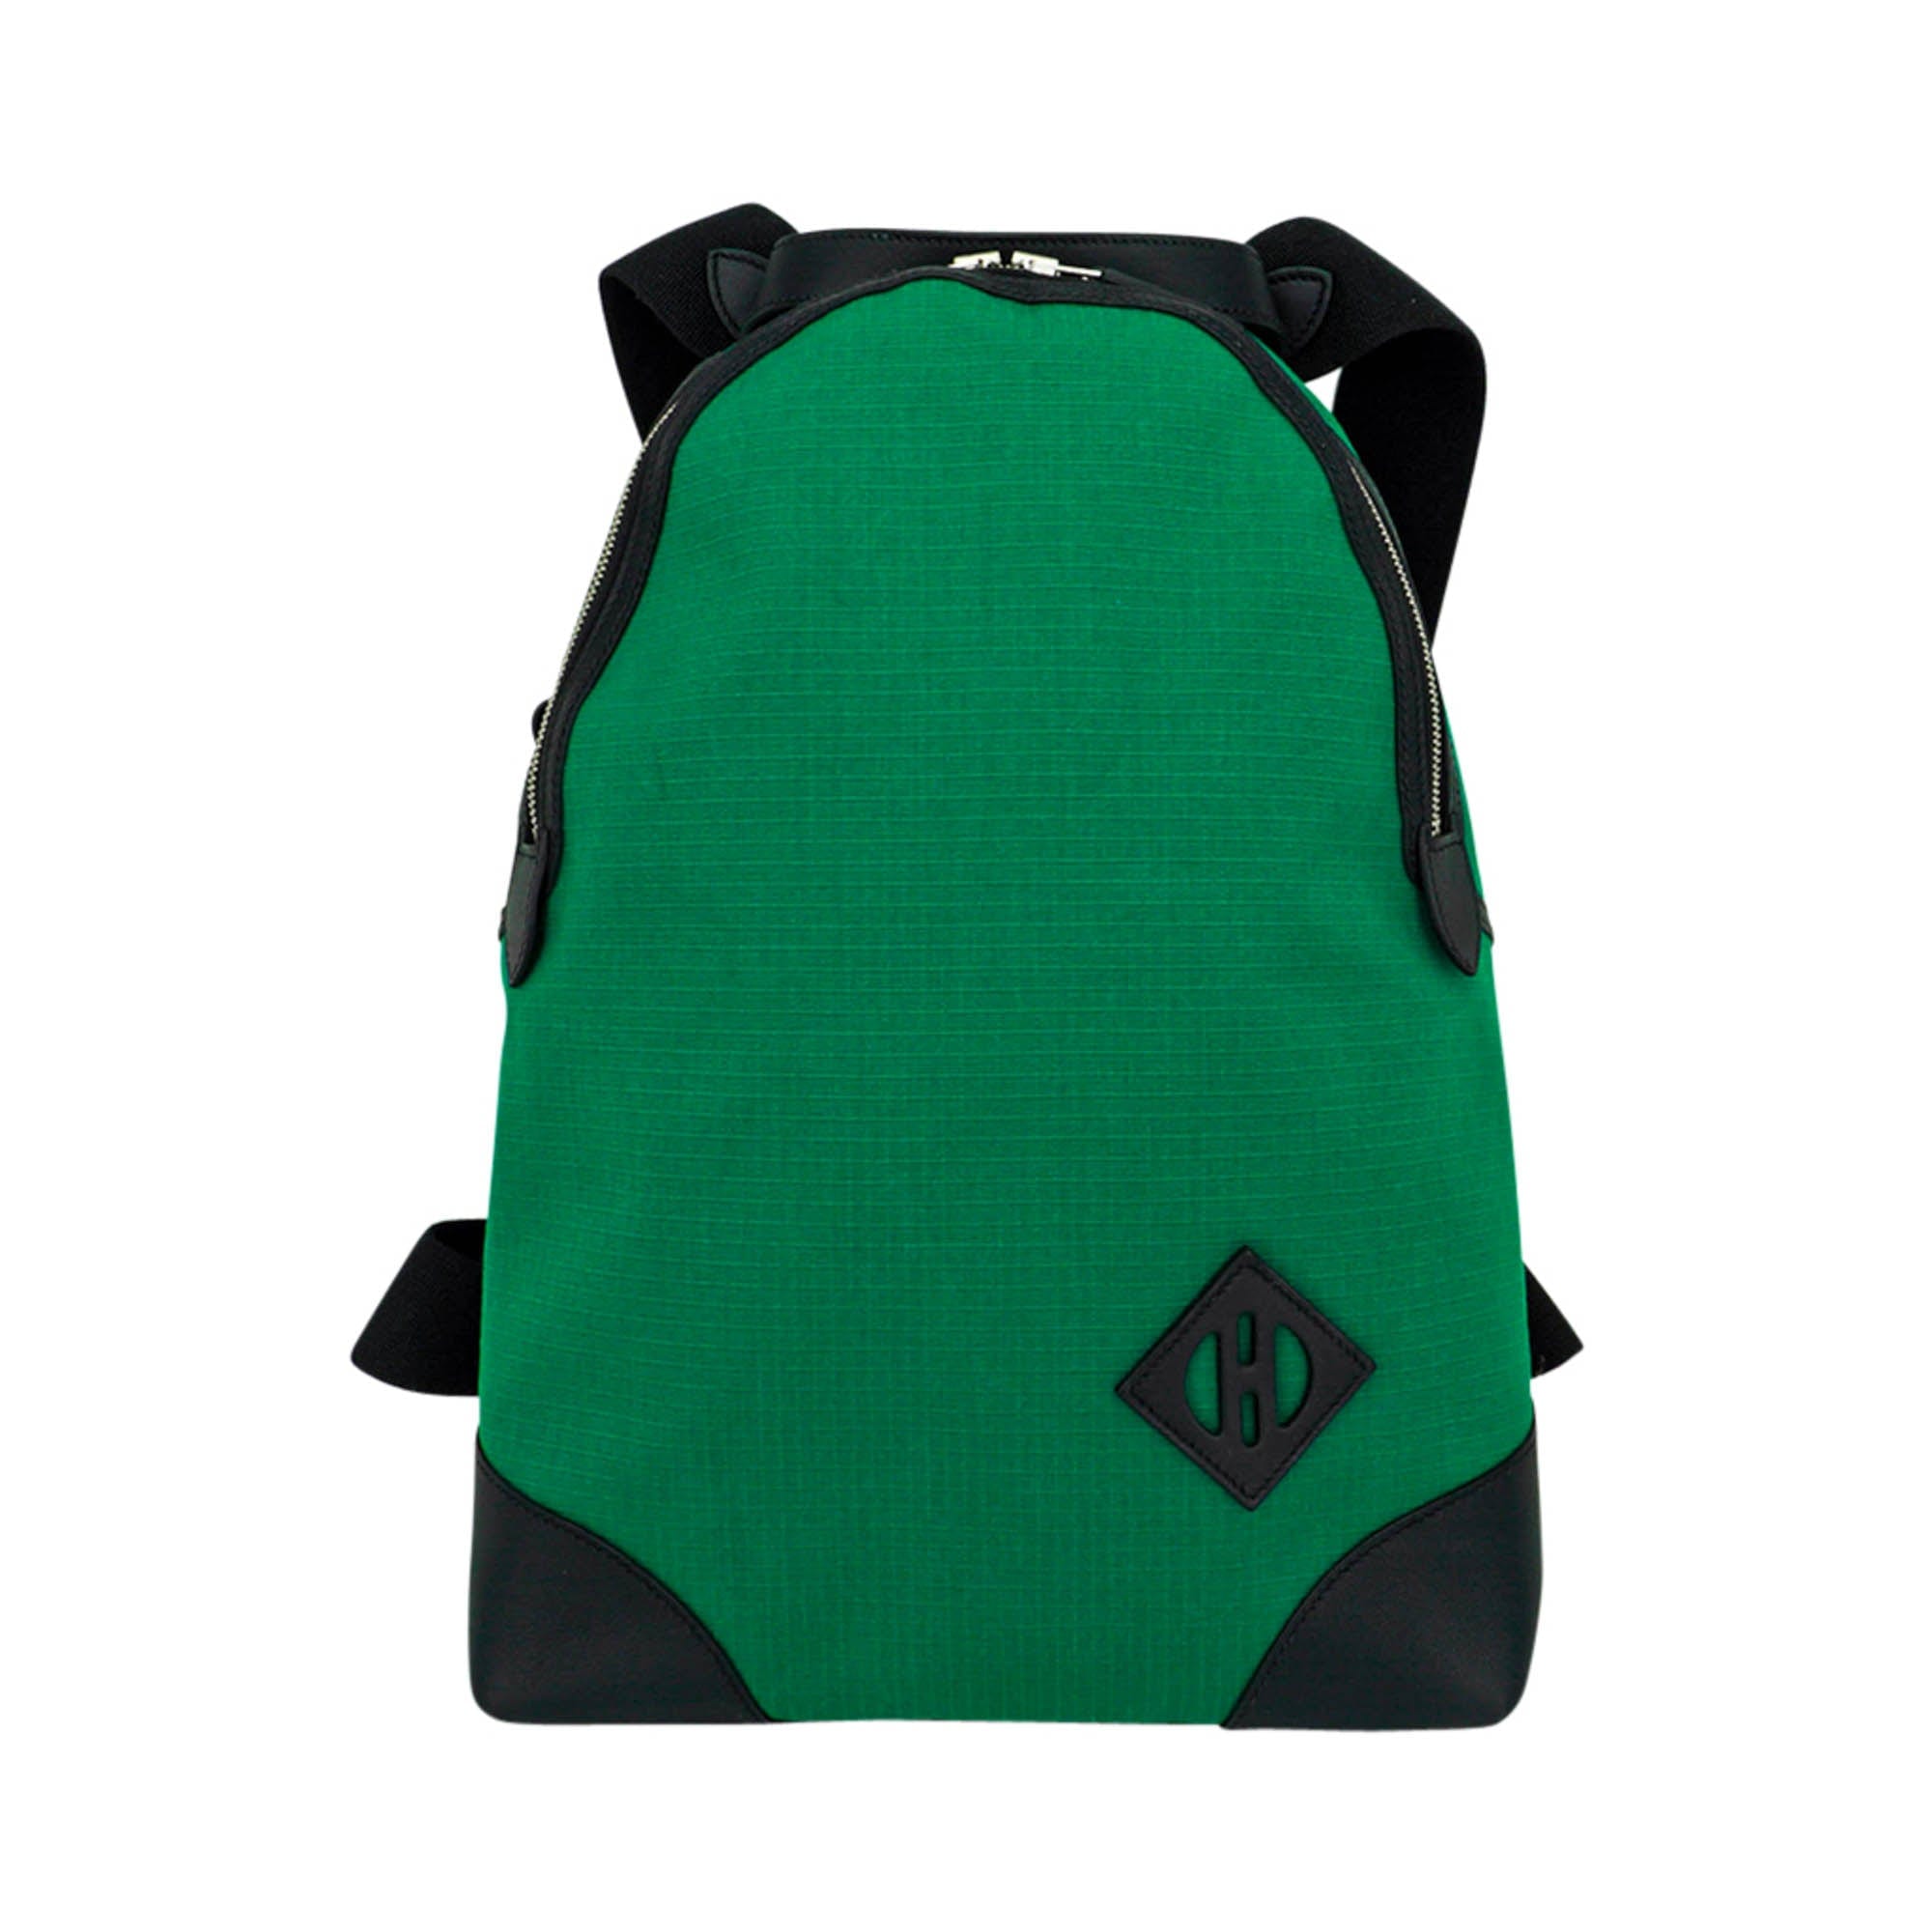 Hermes Vespa TPM Matte Black Crocodile Crossbody Shoulder Bag – Mightychic